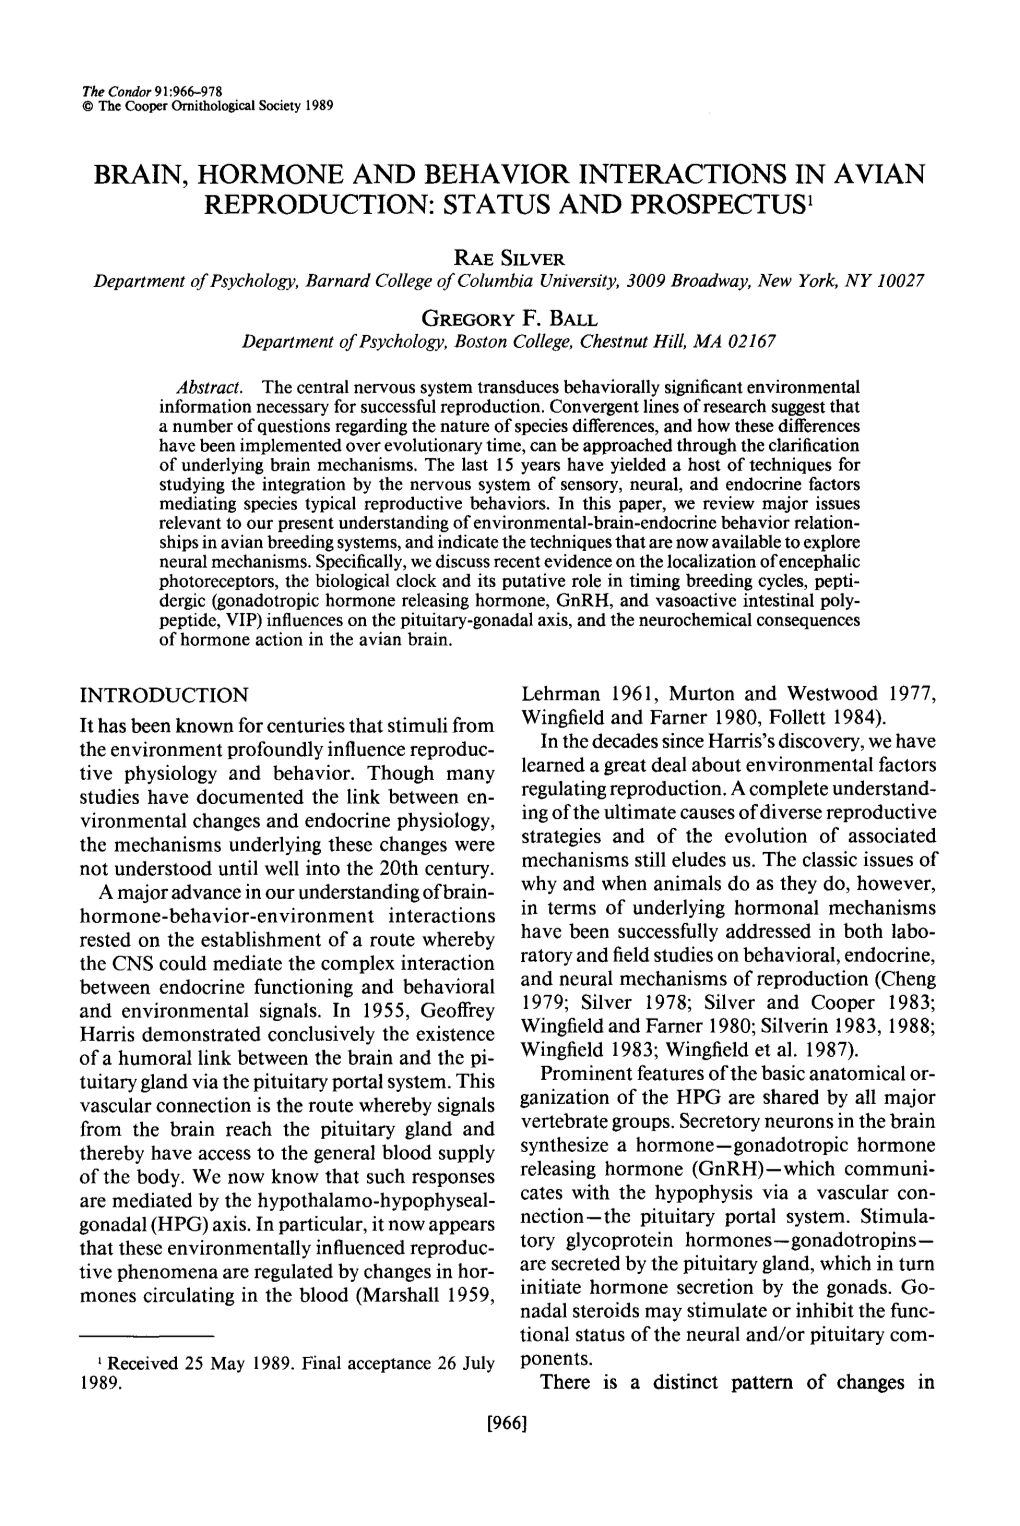 Brain, Hormone and Behavior Interactions in Avian Reproduction: Status and Prospectus